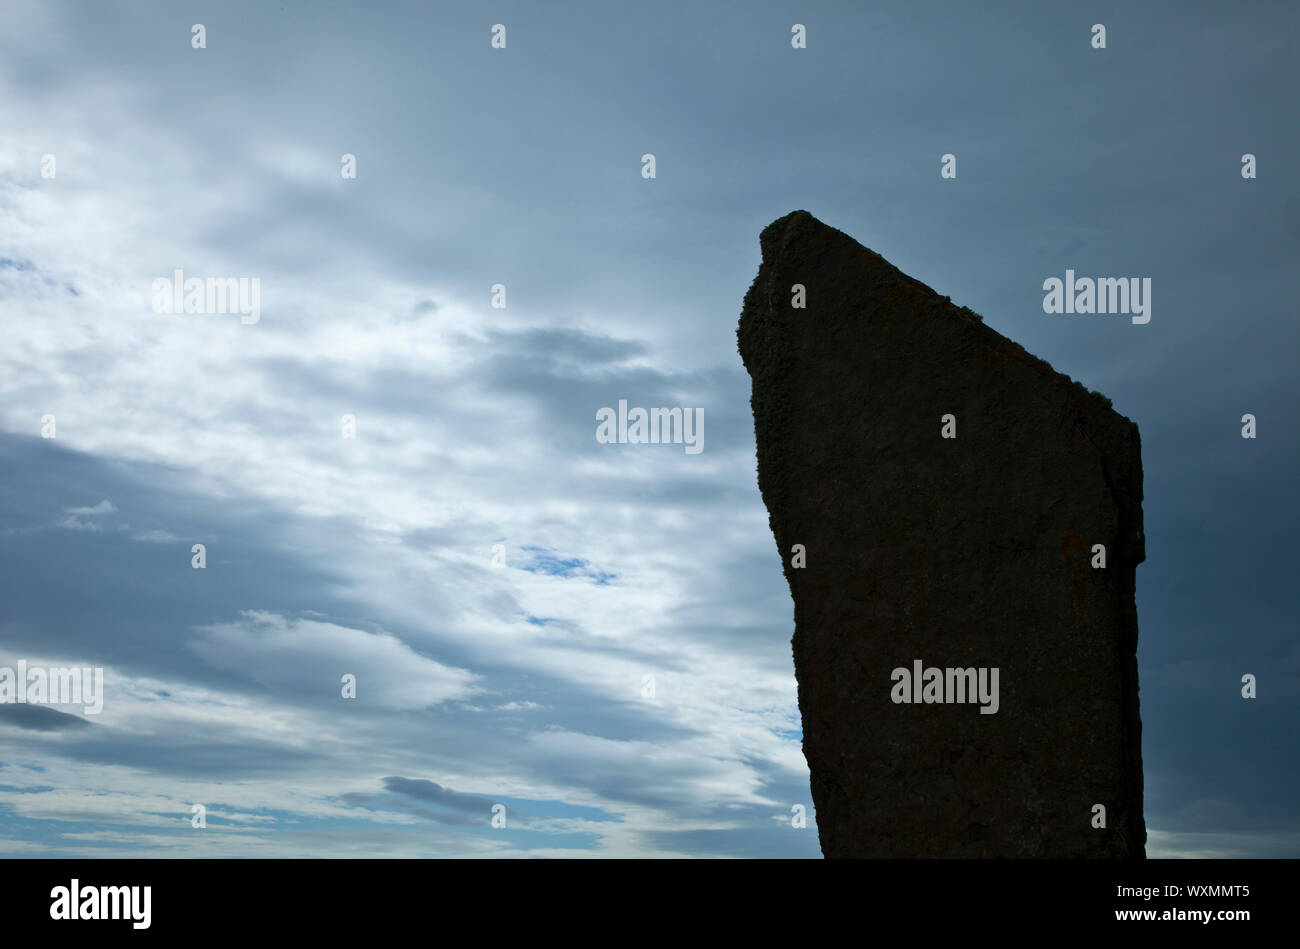 Monumento Neolítico Piedras de Stenness (Stones of Stenness), Mainland. Islas Orkney. Escocia.UK Stock Photo